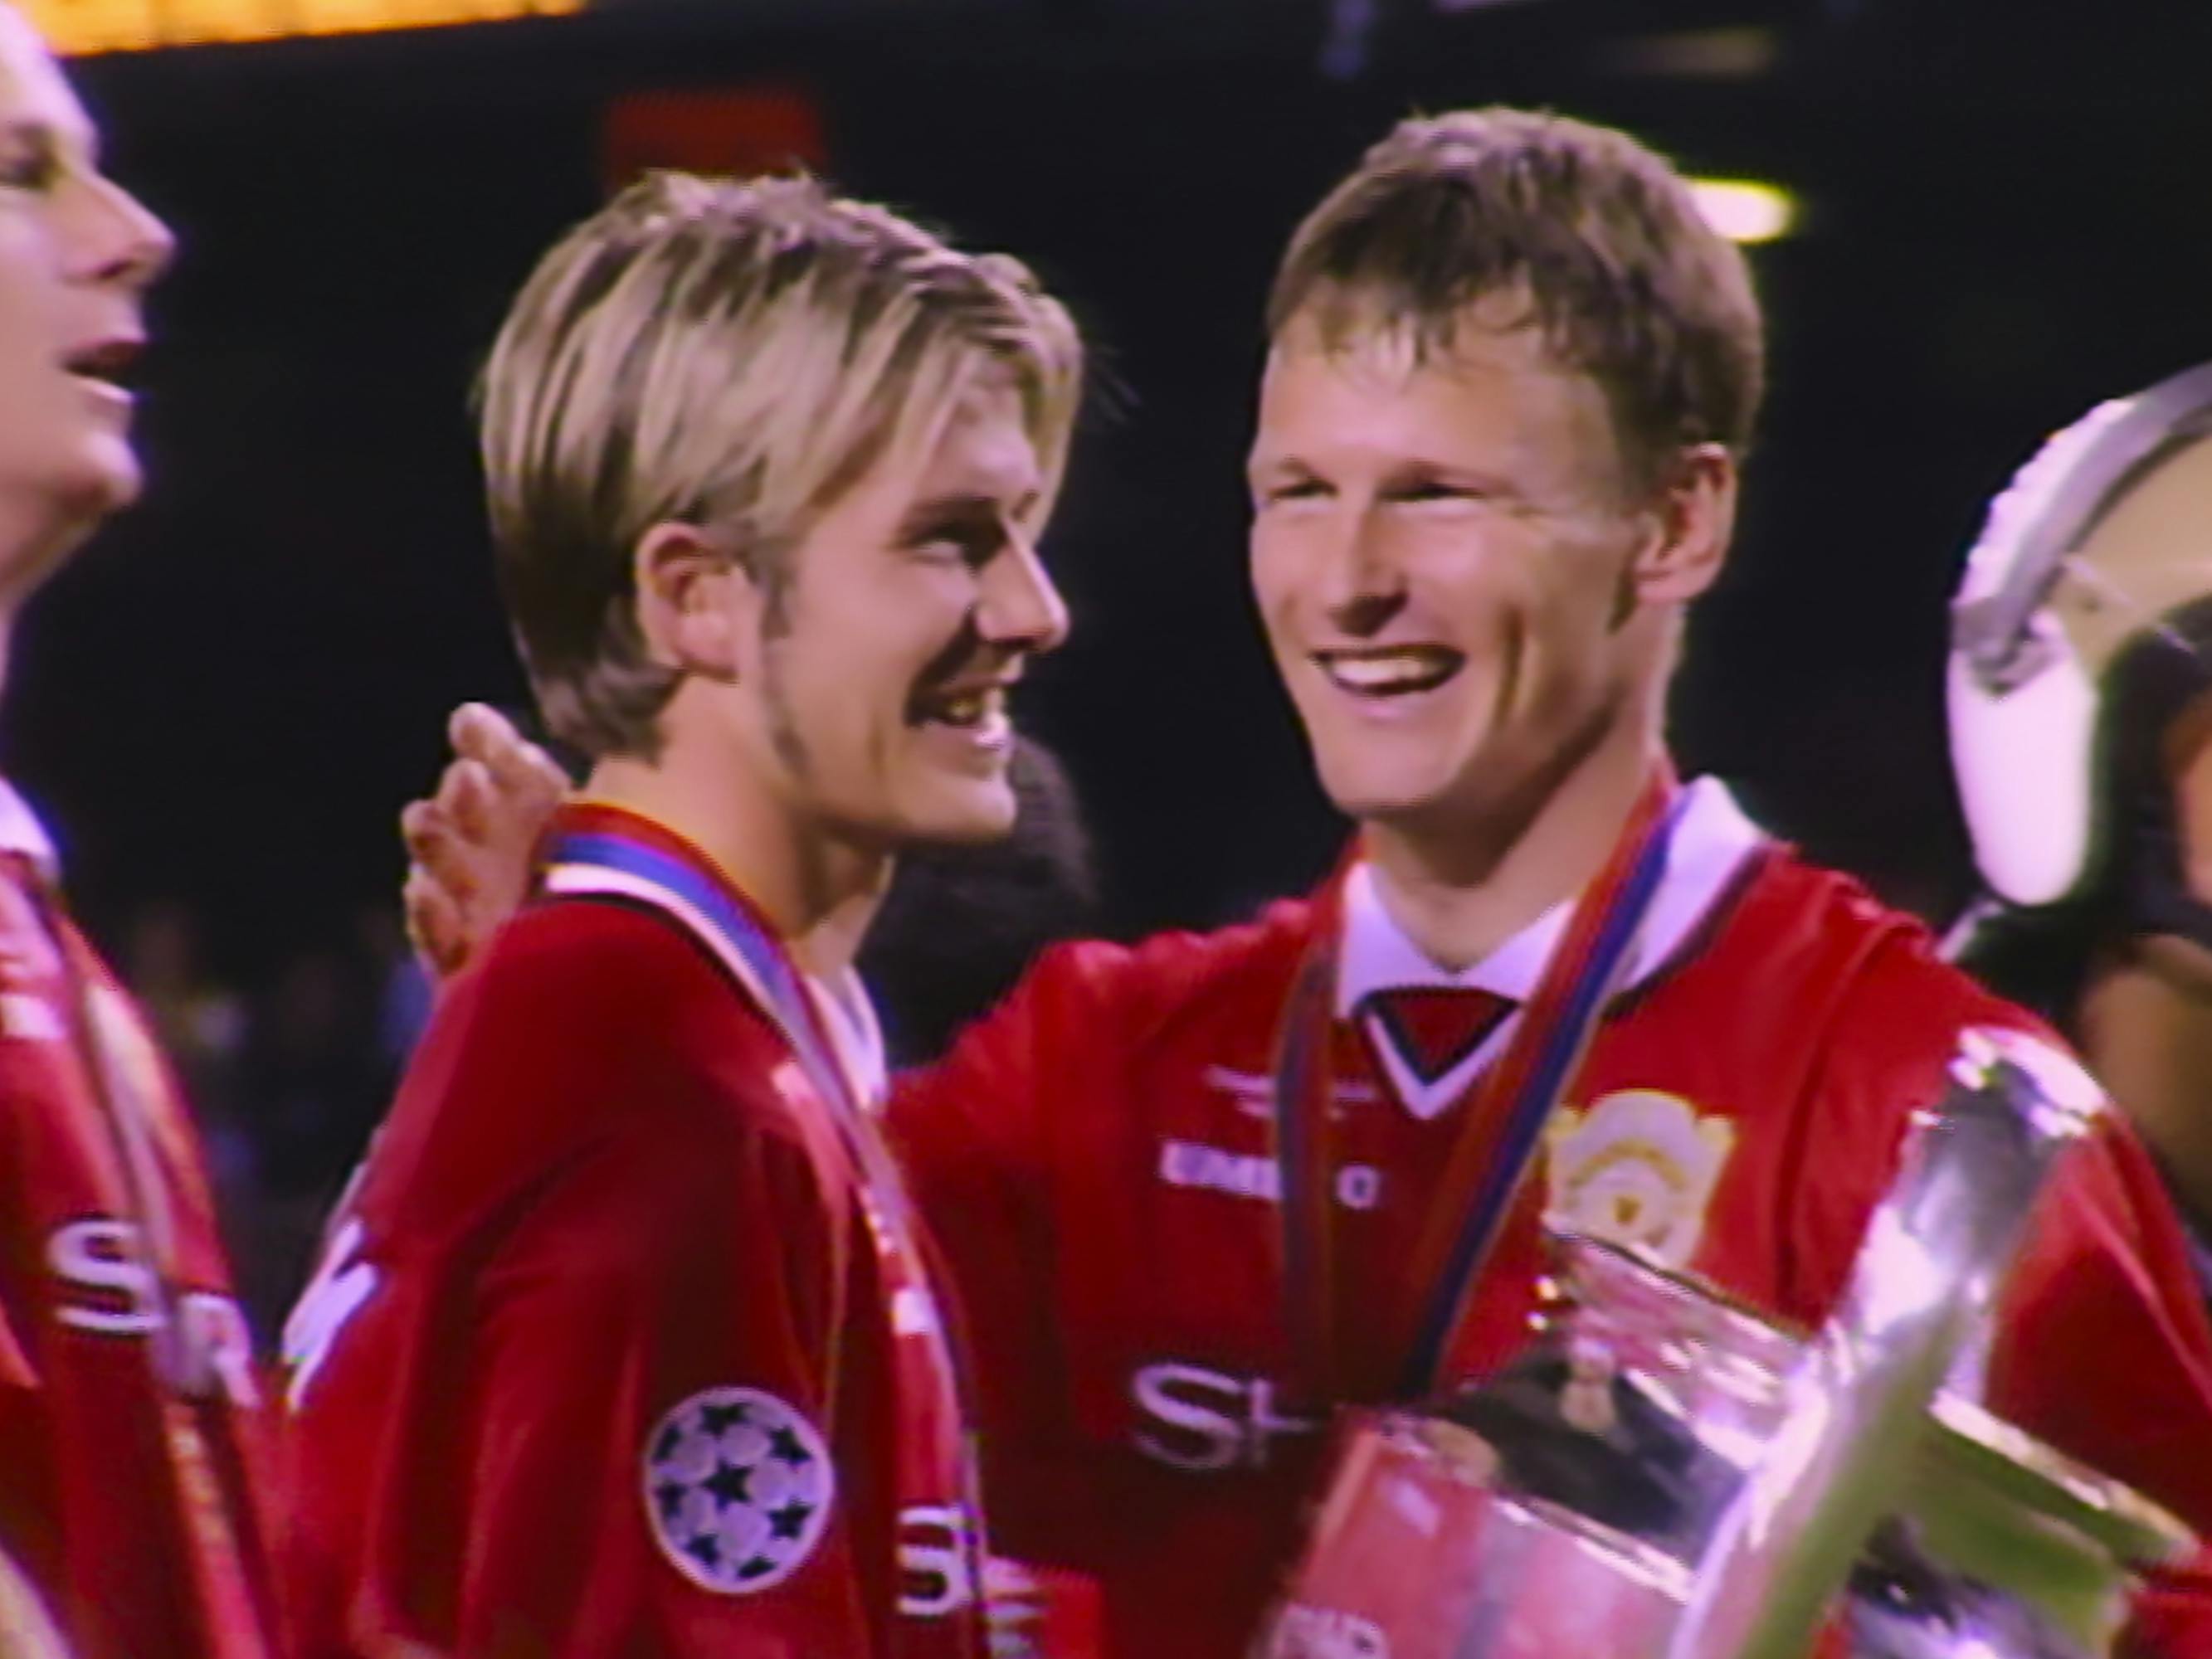 David Beckham and Sami Hyypiä celebrate with big smiles. I wish my hair were as floppy as Beckham’s!